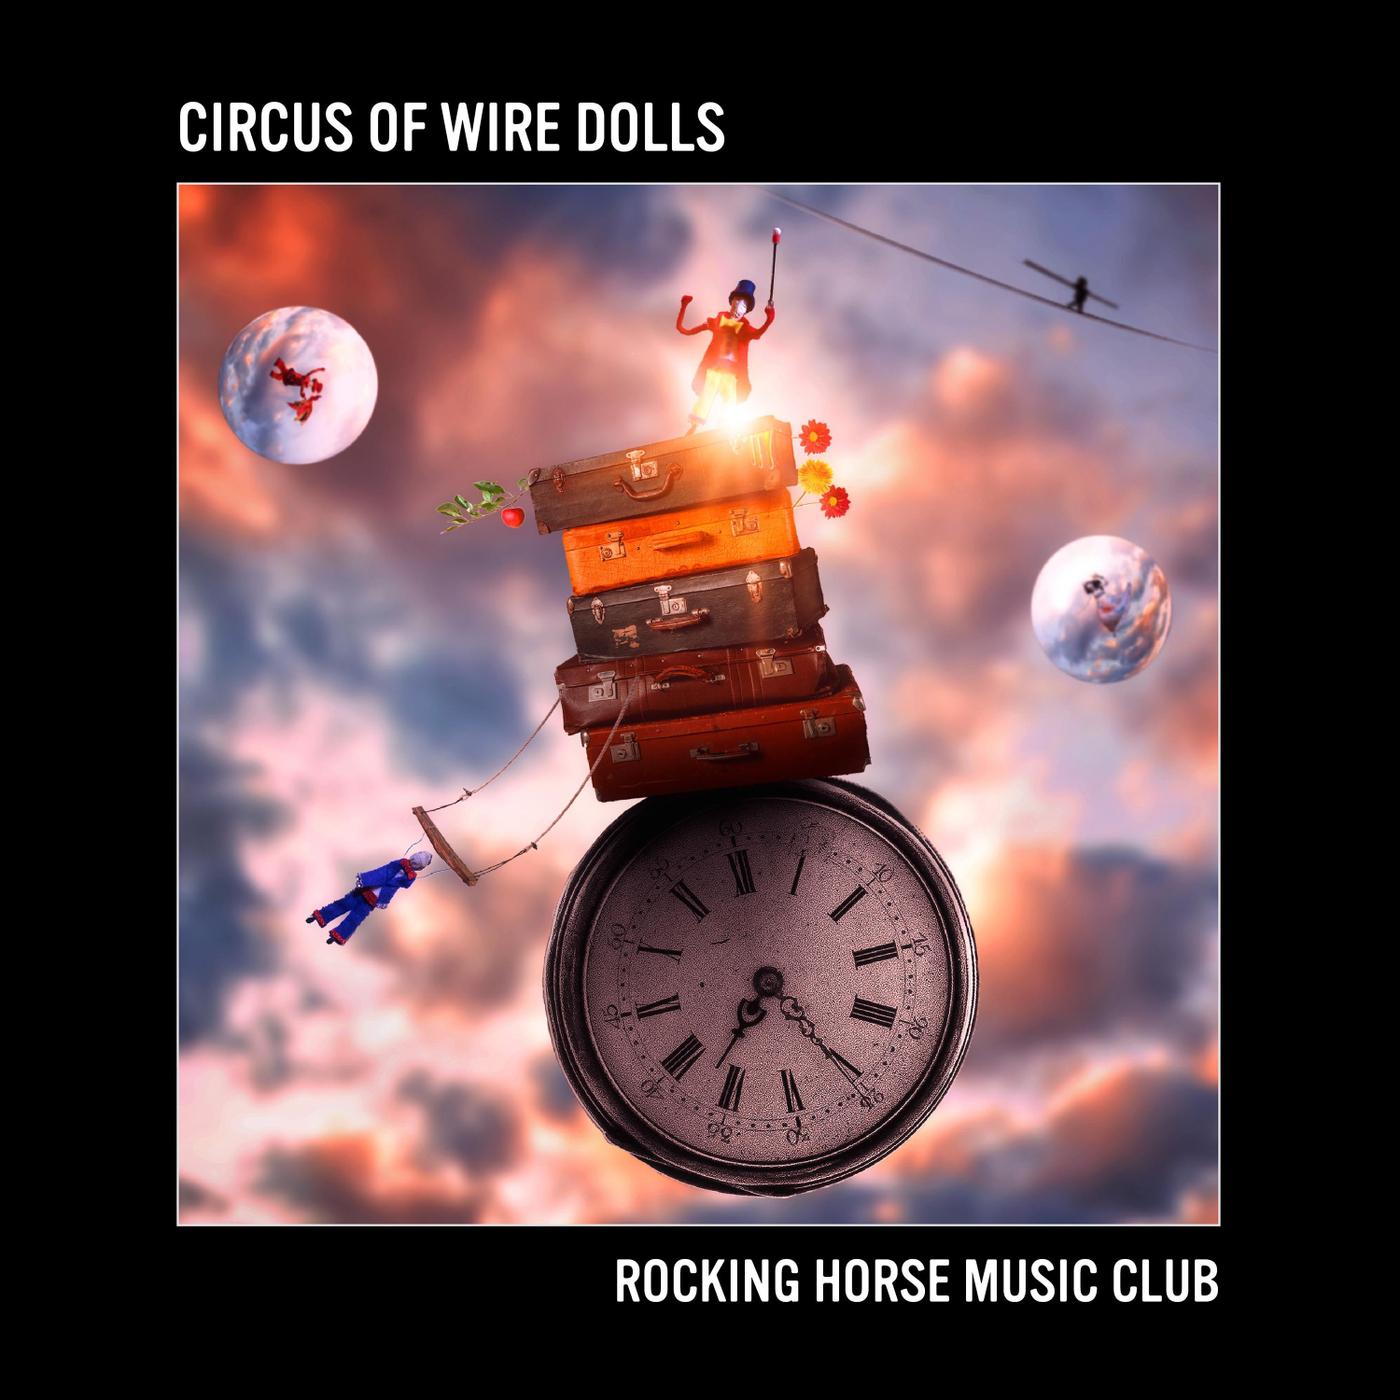 Rocking Horse Music Club - Coda: Slide Down the Cellar Door